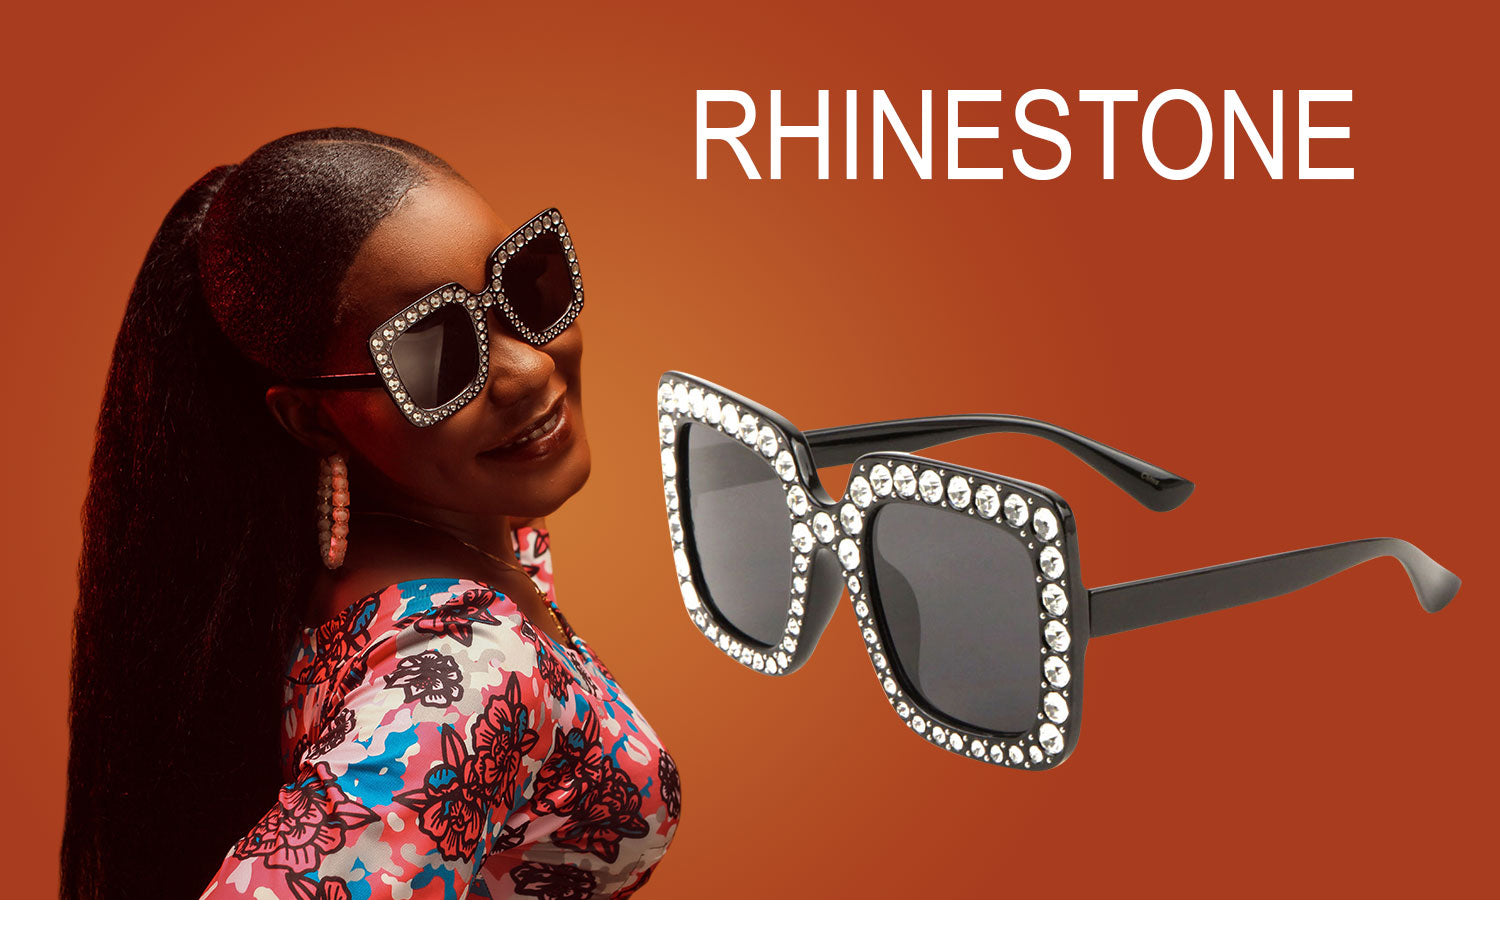 Rainbow Star Party Wholesale Sunglasses - Frontier Fashion, Inc.